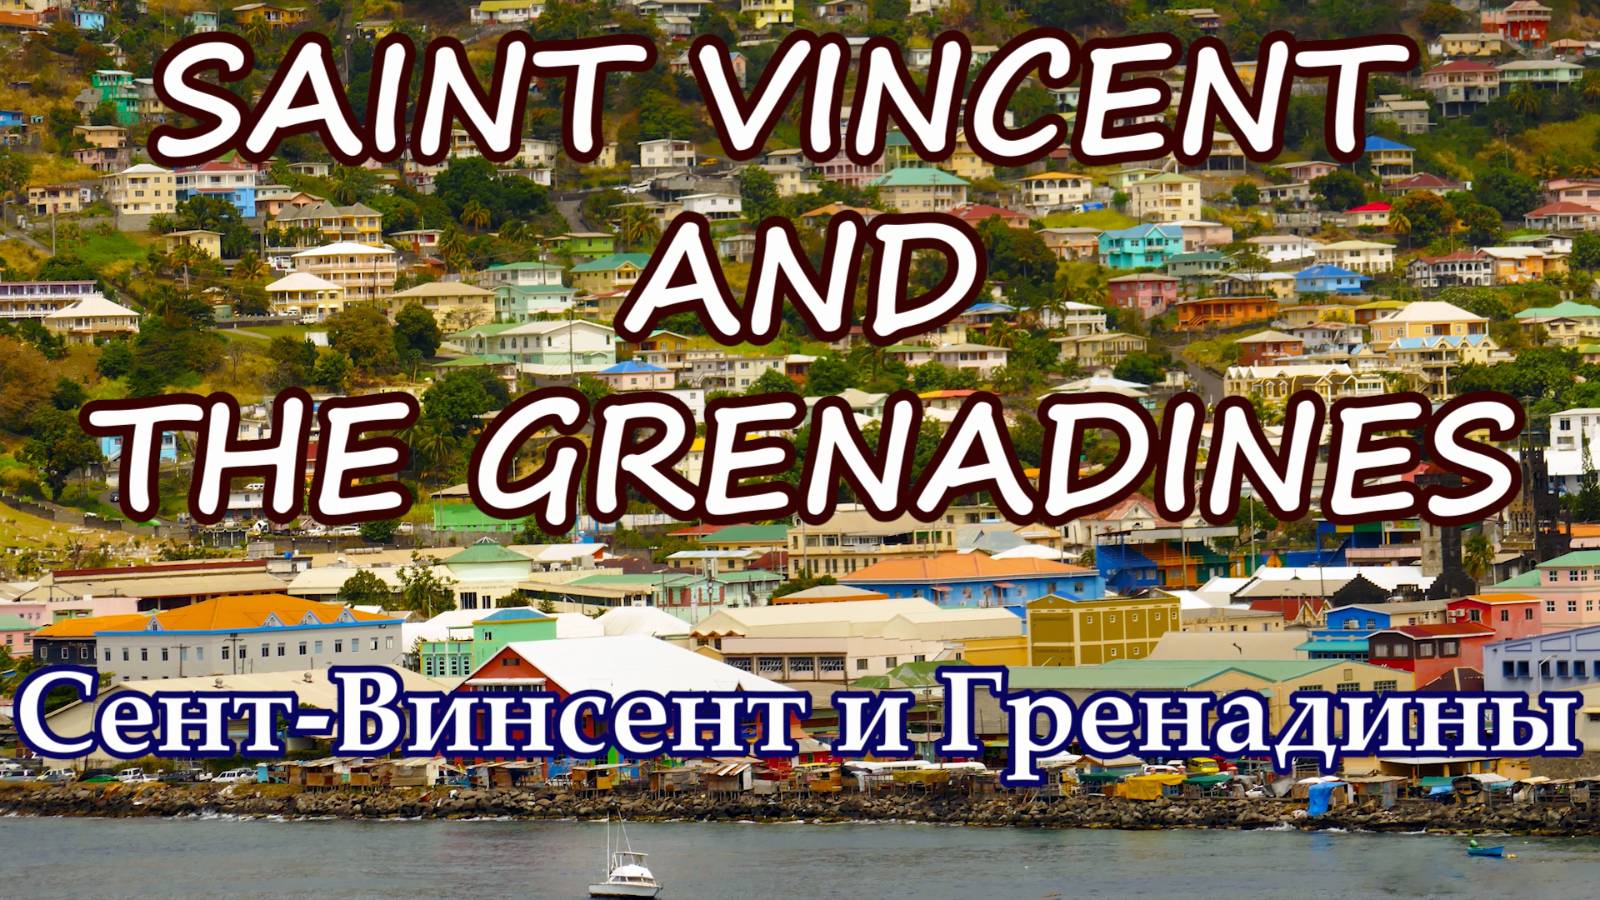 Сент-Винсент и Гренадины. Saint Vincent and the Grenadines.